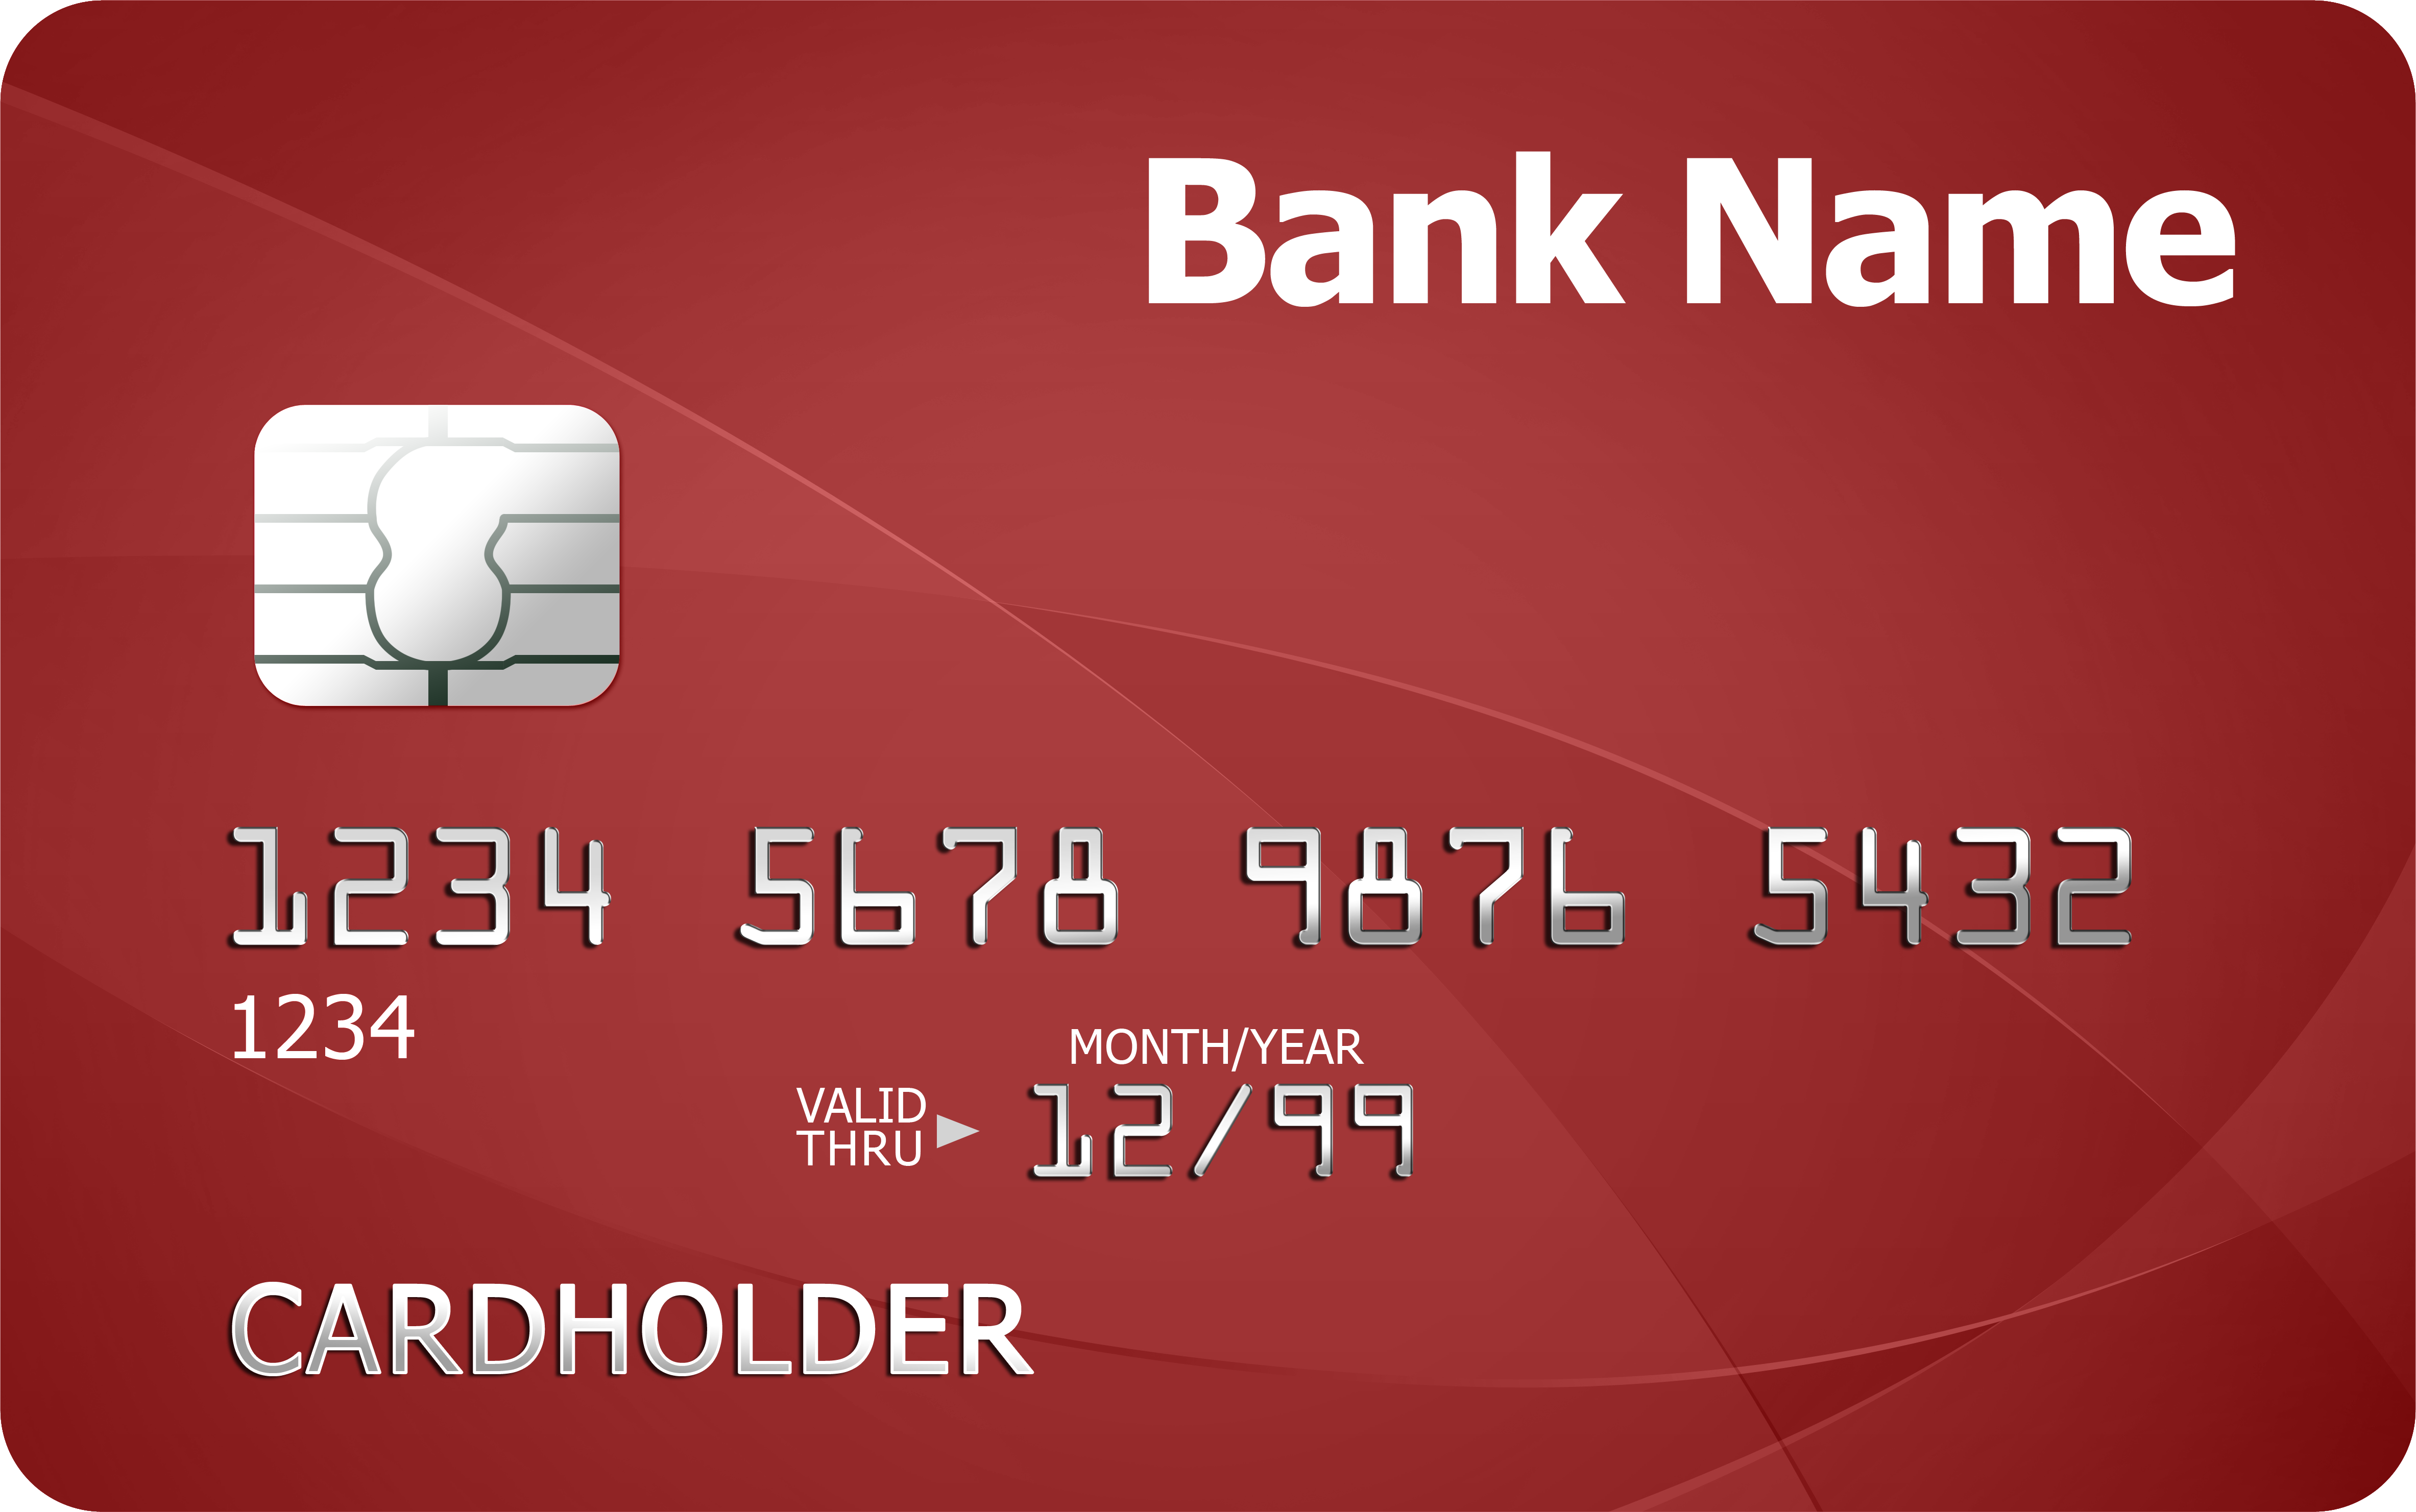 MasterCard Credit Card Numbers